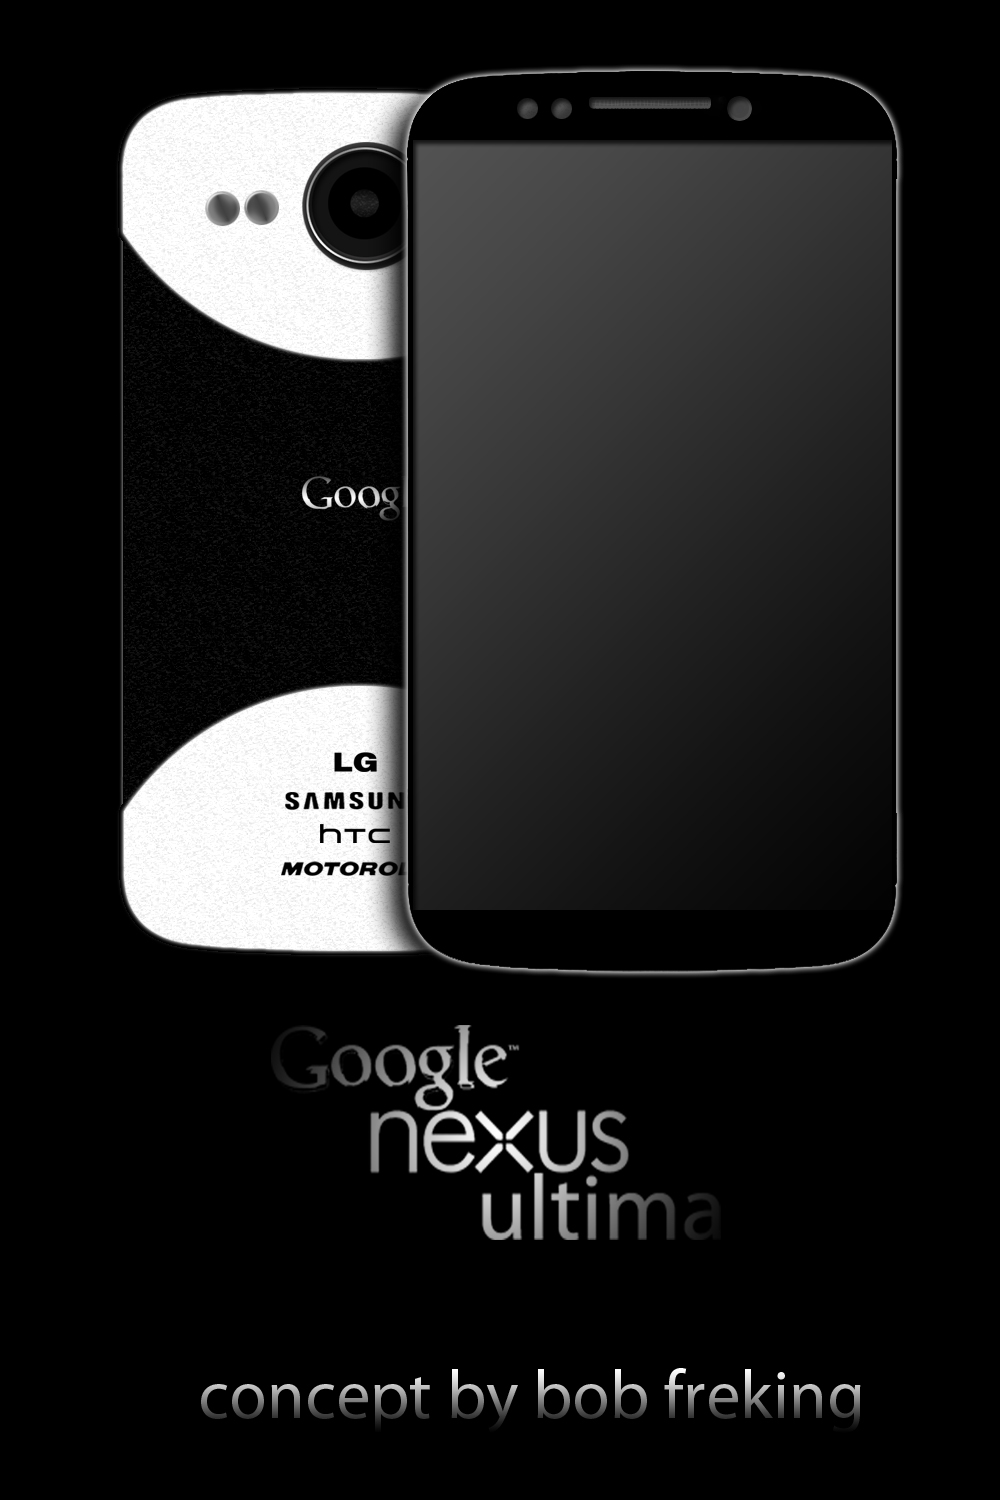 Galaxy Nexus Ultima